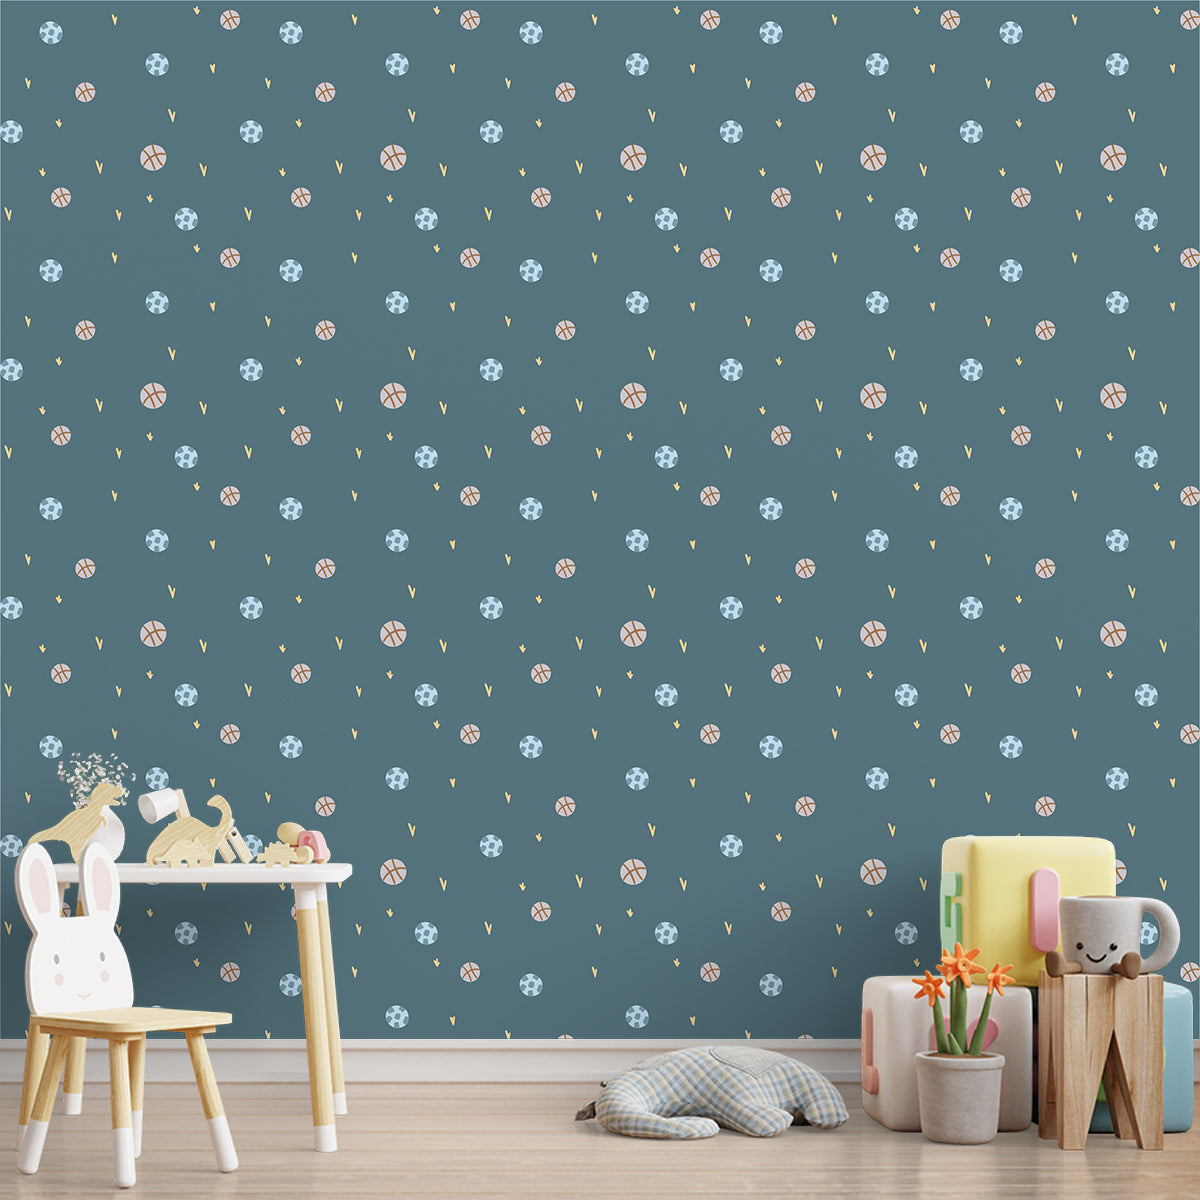 Football Miniscape, Cute Wallpaper Design for Kids Room, Blue